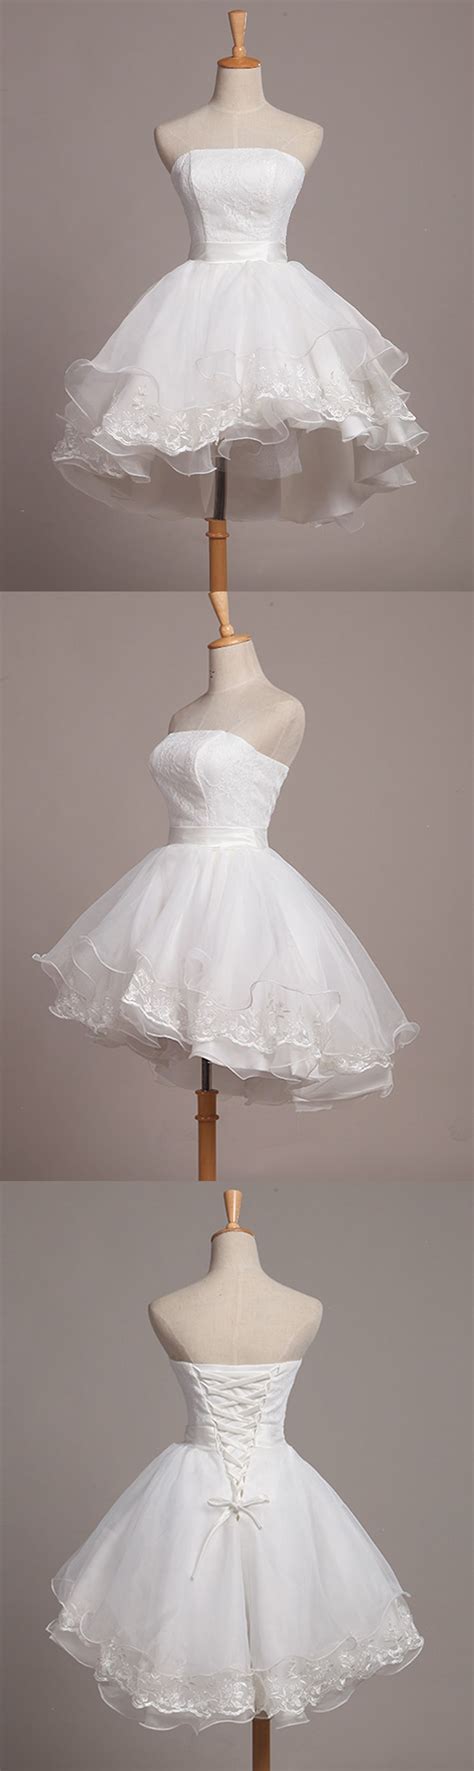 White Tulle Strapless Mini Bridesmaid Dress Short A Line Prom Dress